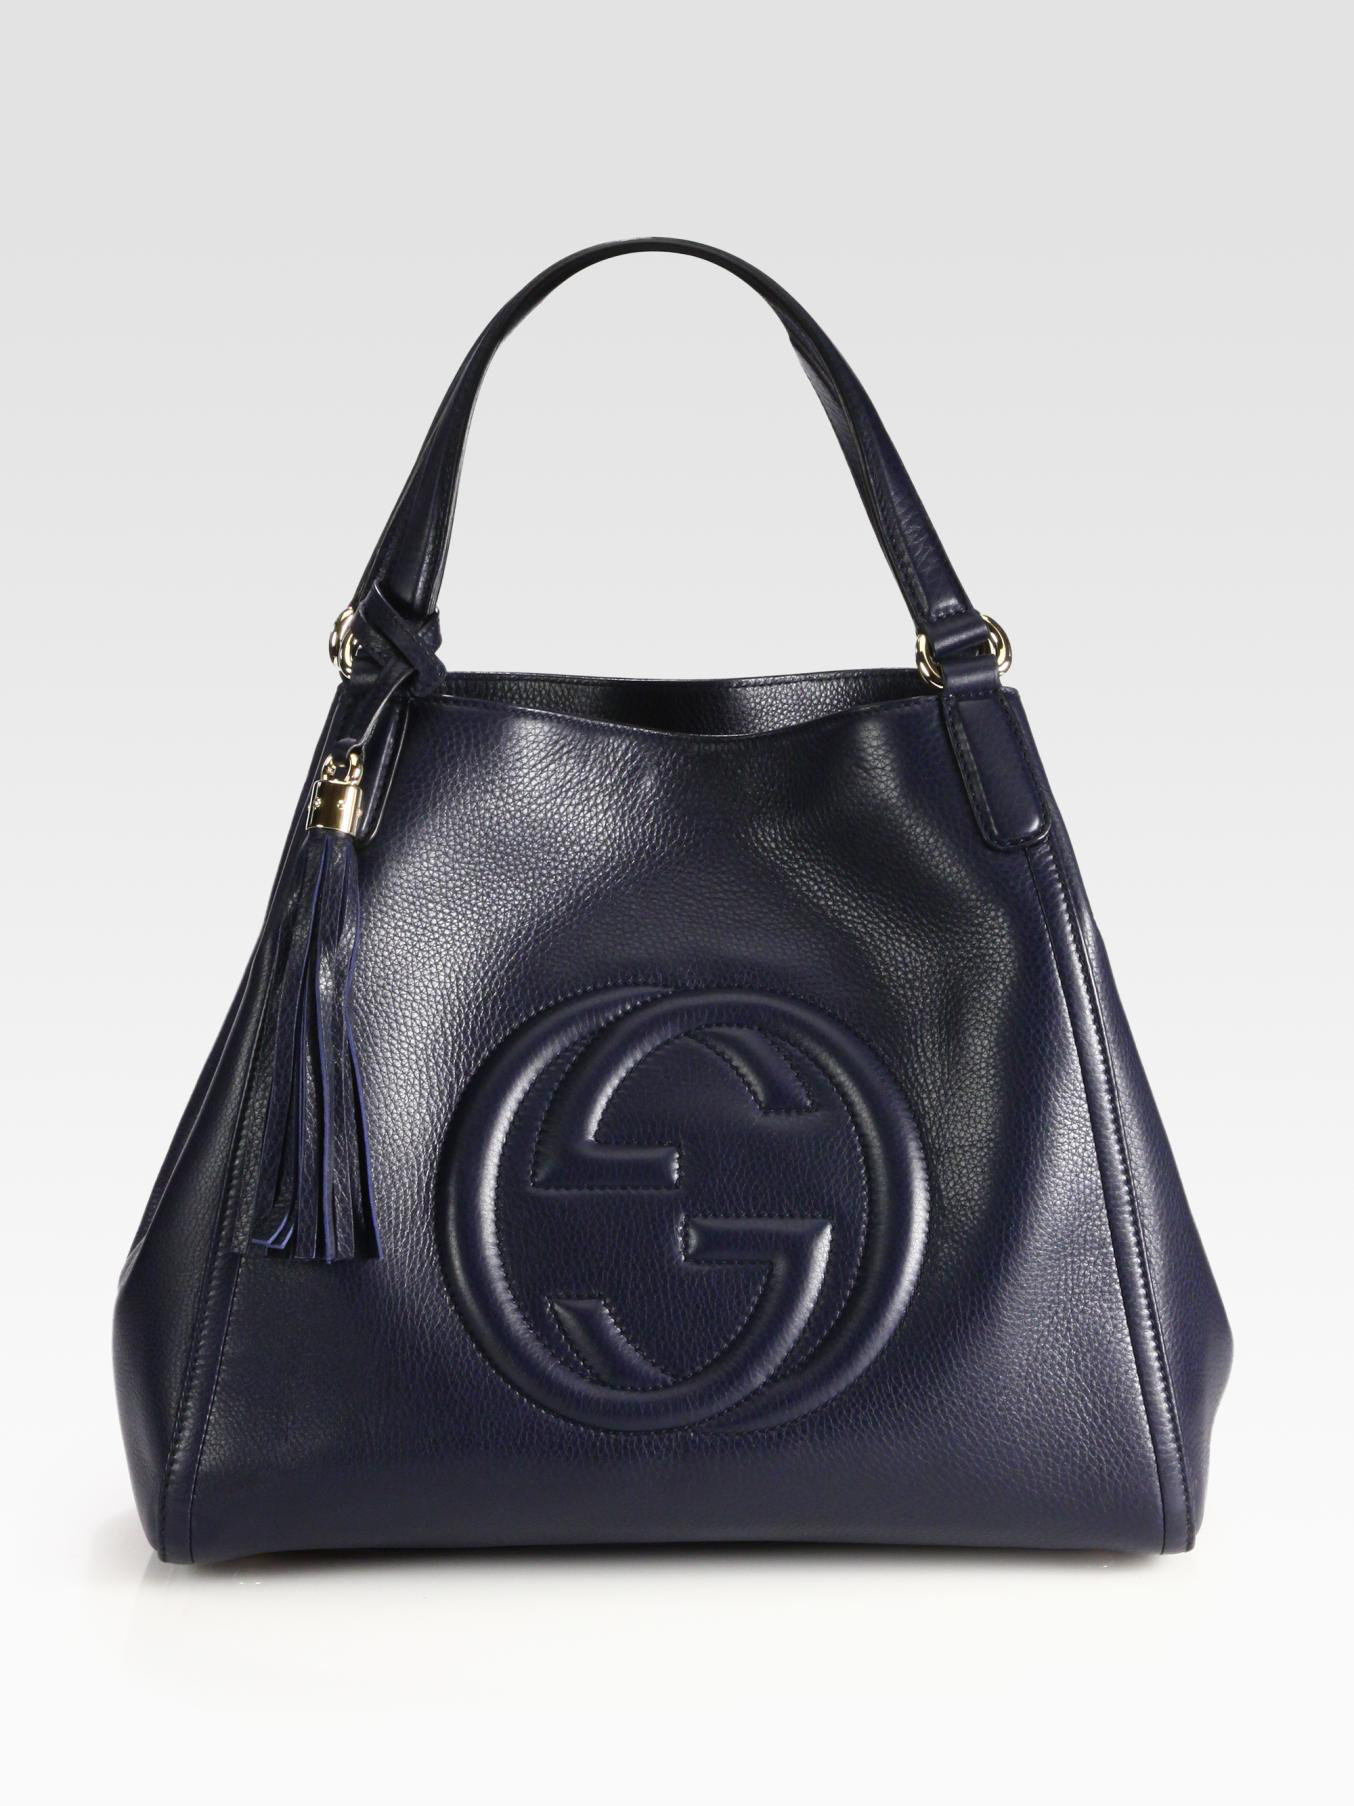 Gucci Soho Leather Shoulder Bag in Navy (Blue) - Lyst